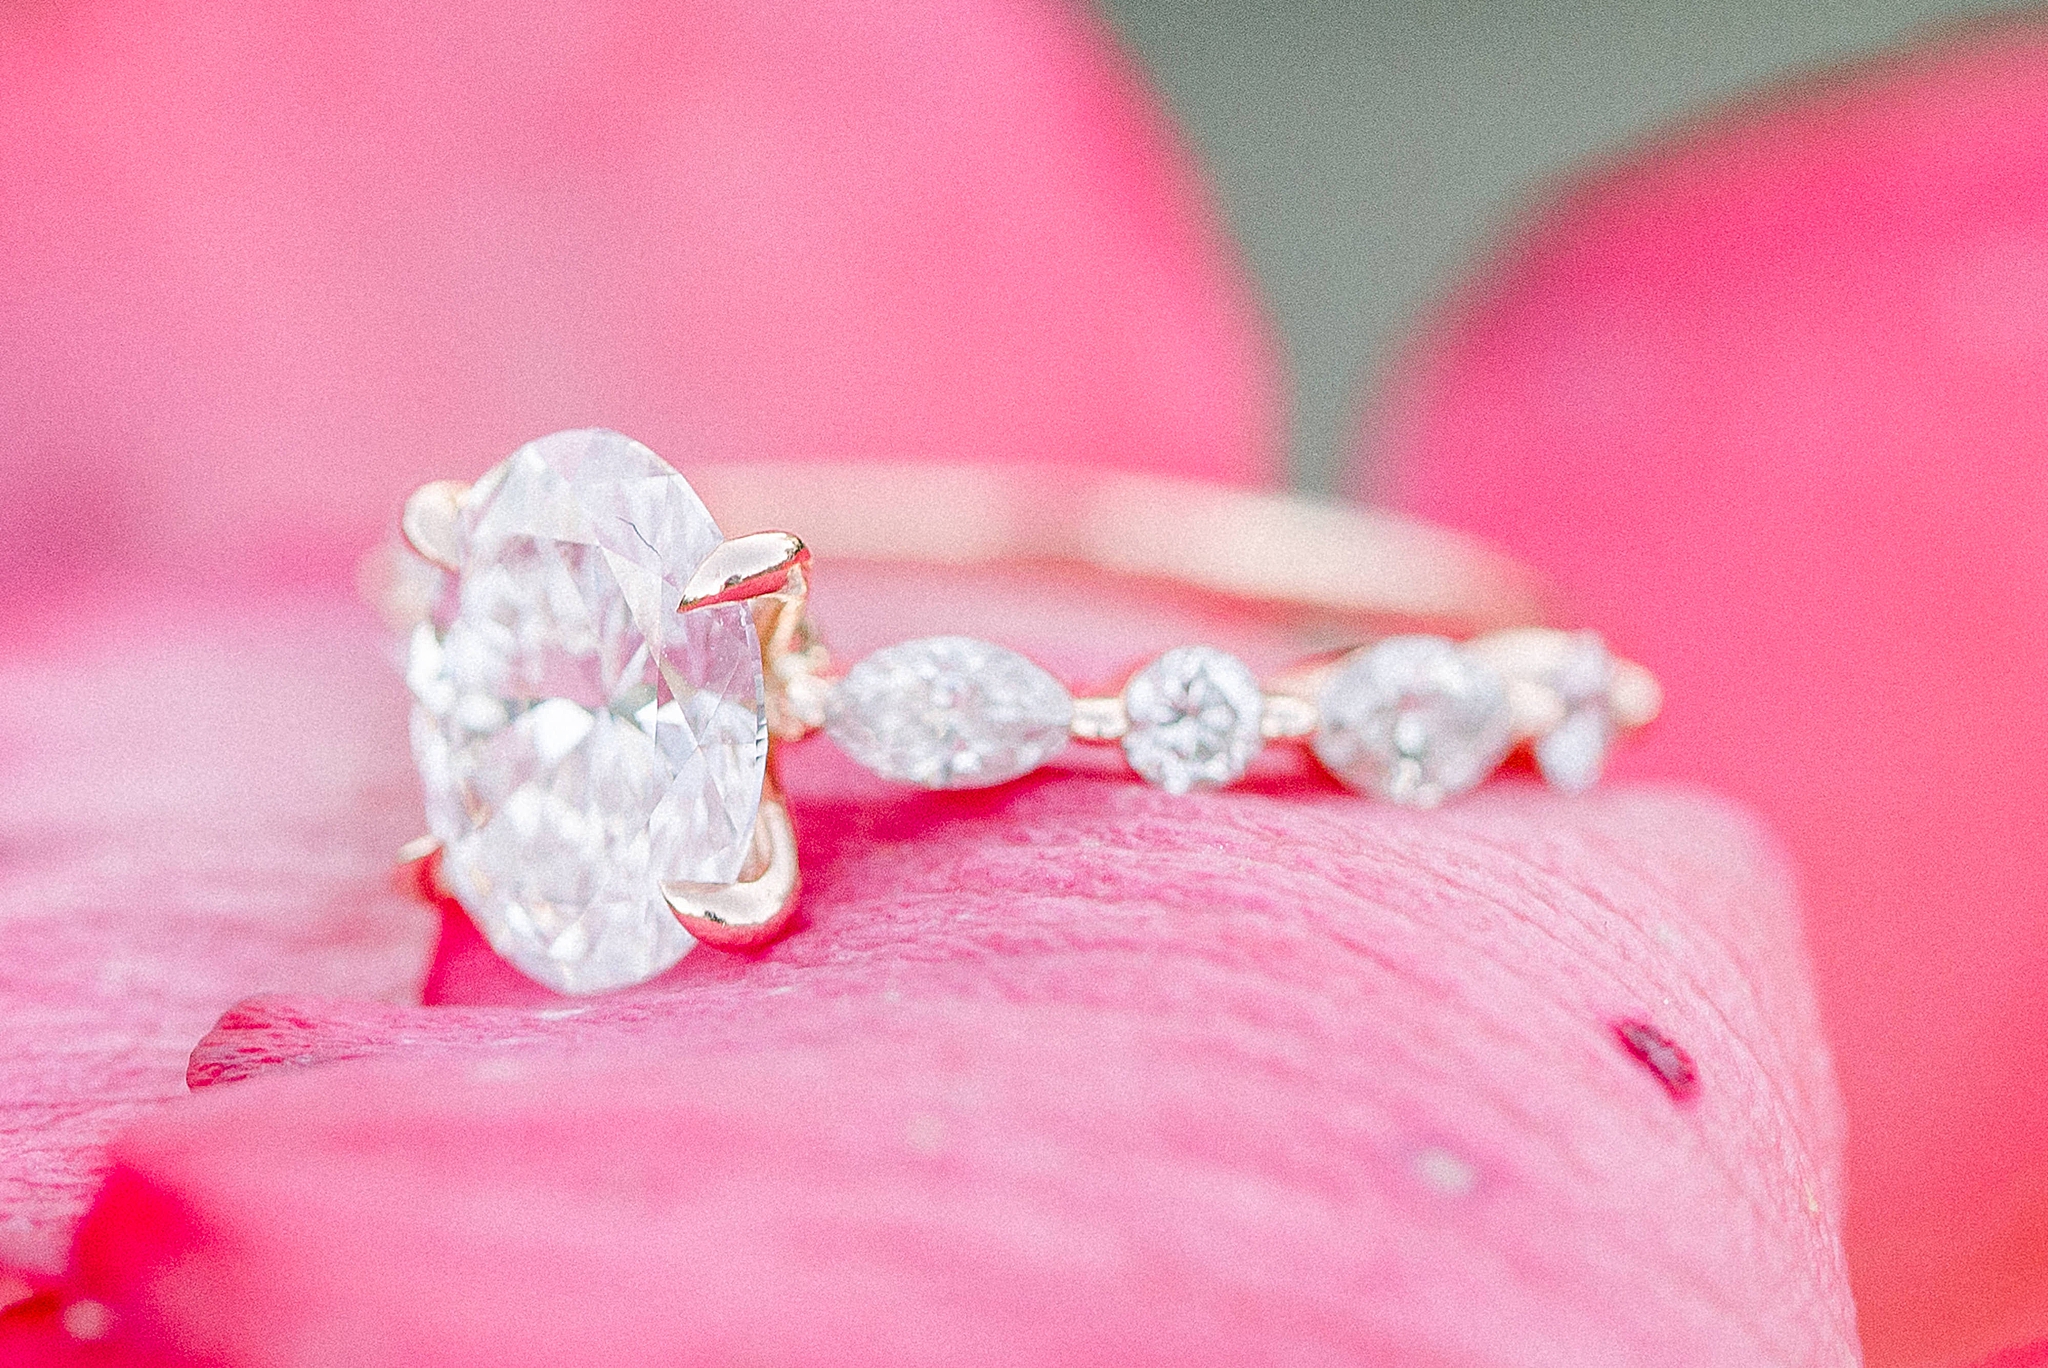 engagement ring rests on pink petal